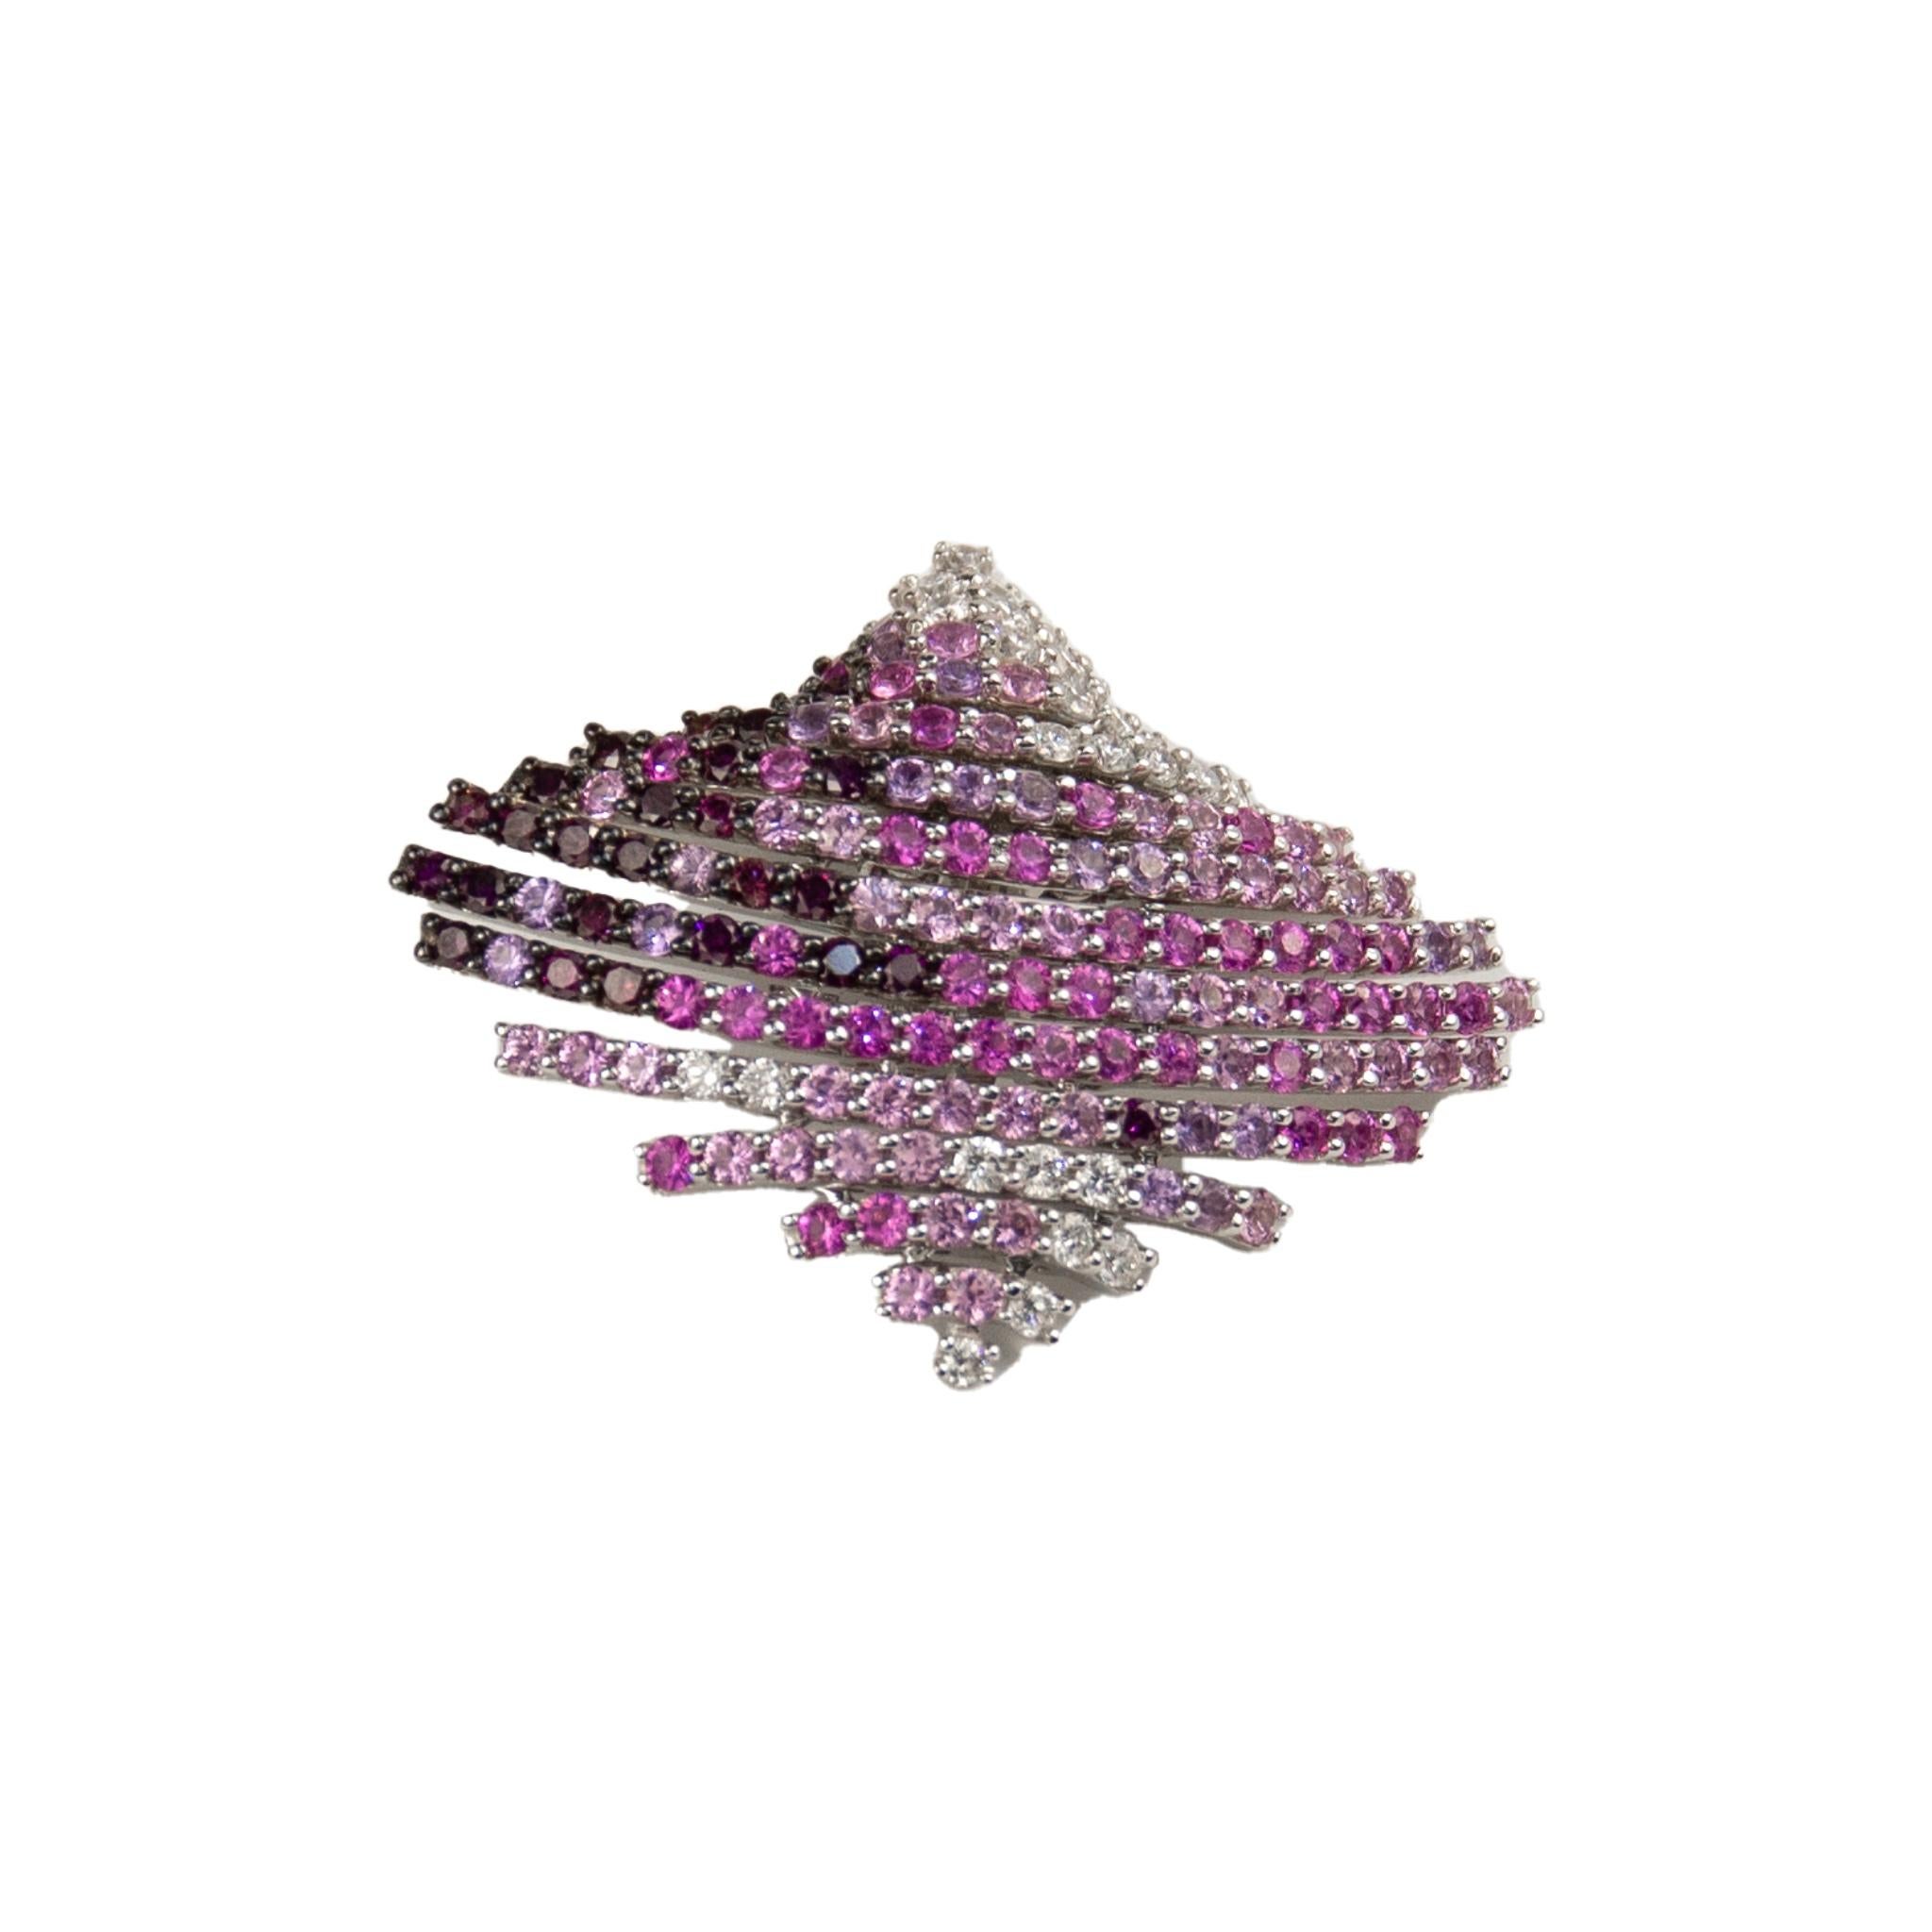 Porrati 18K White Gold Earrings
Diamond: 3.49ctw
Sapphire: 7.91ctw
SKU: BLU01744
Retail price: $35,900.00